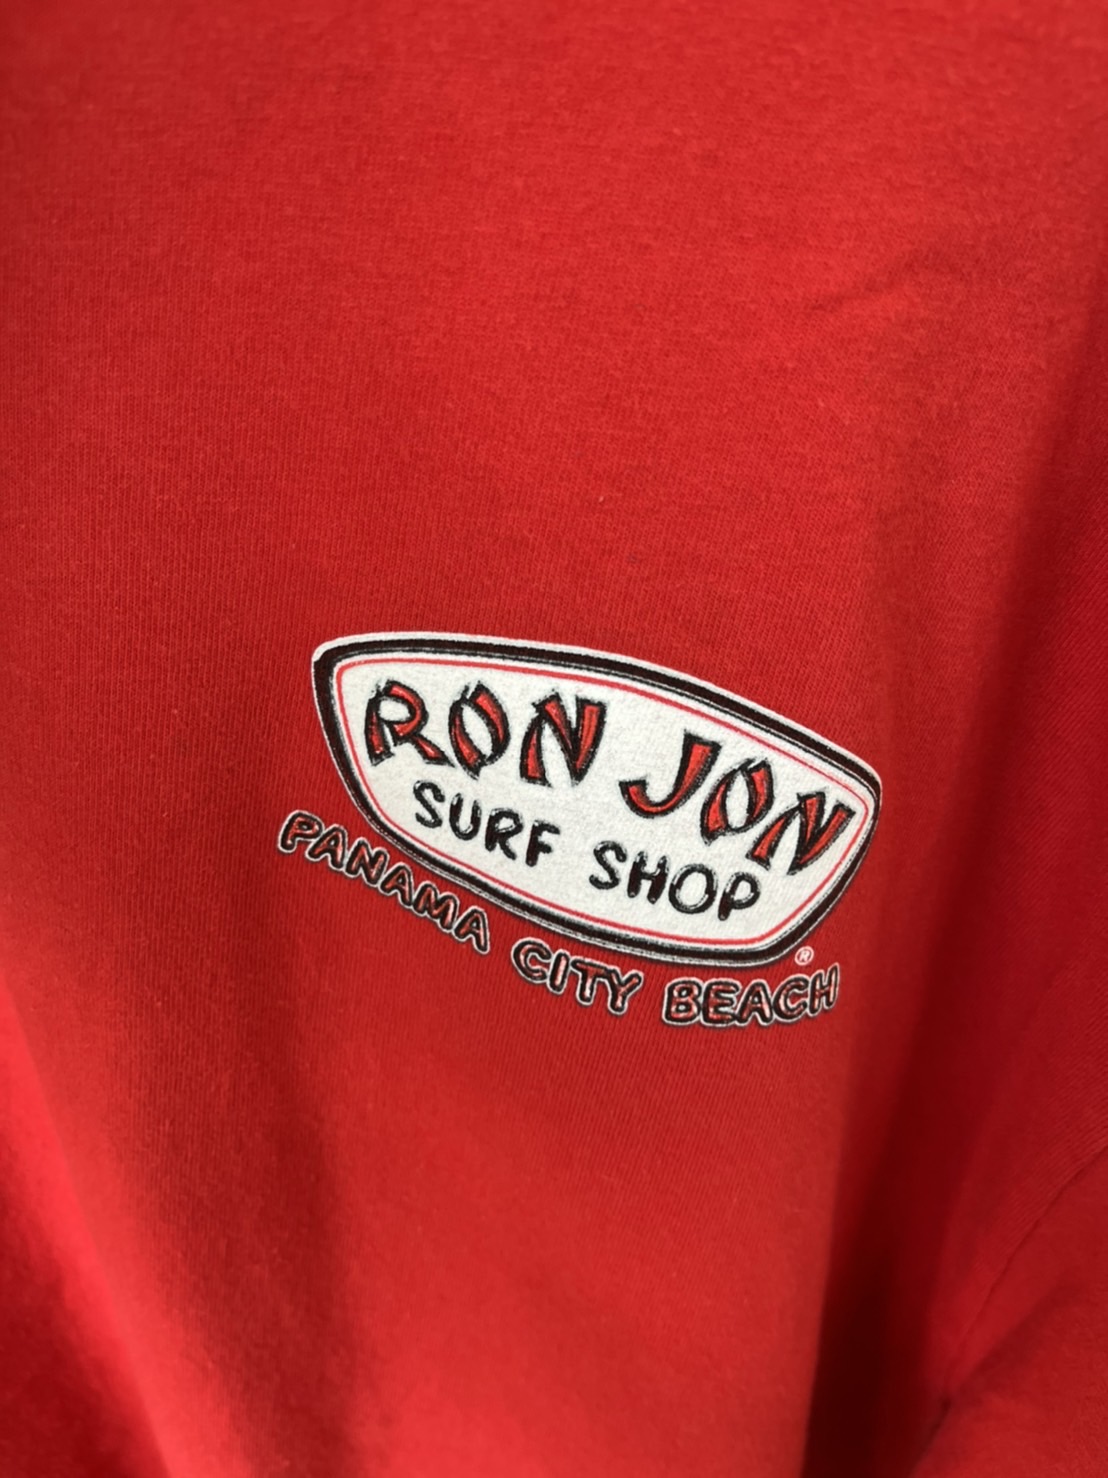 【RONJON SURF SHOP】USED surf skate logo T-shirt （men's XL)